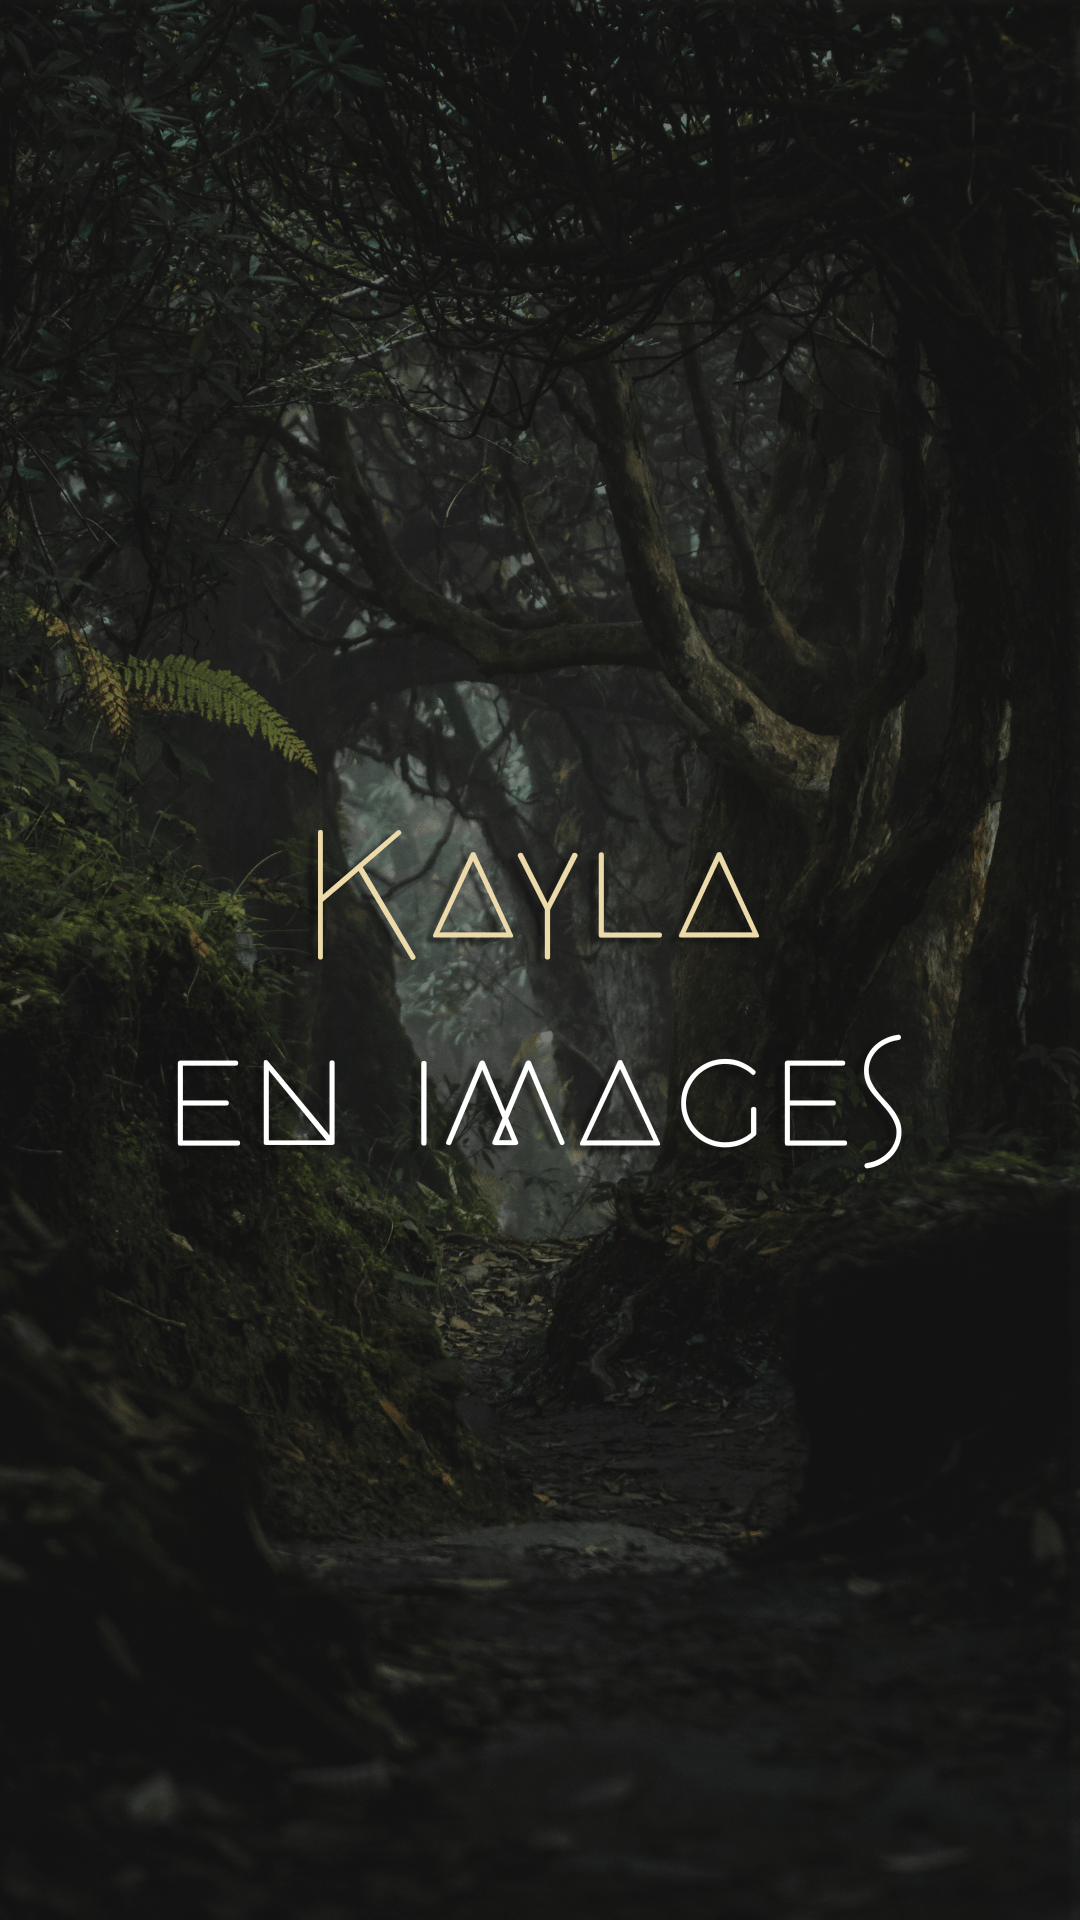 Kayla en images -aesthetic du livre